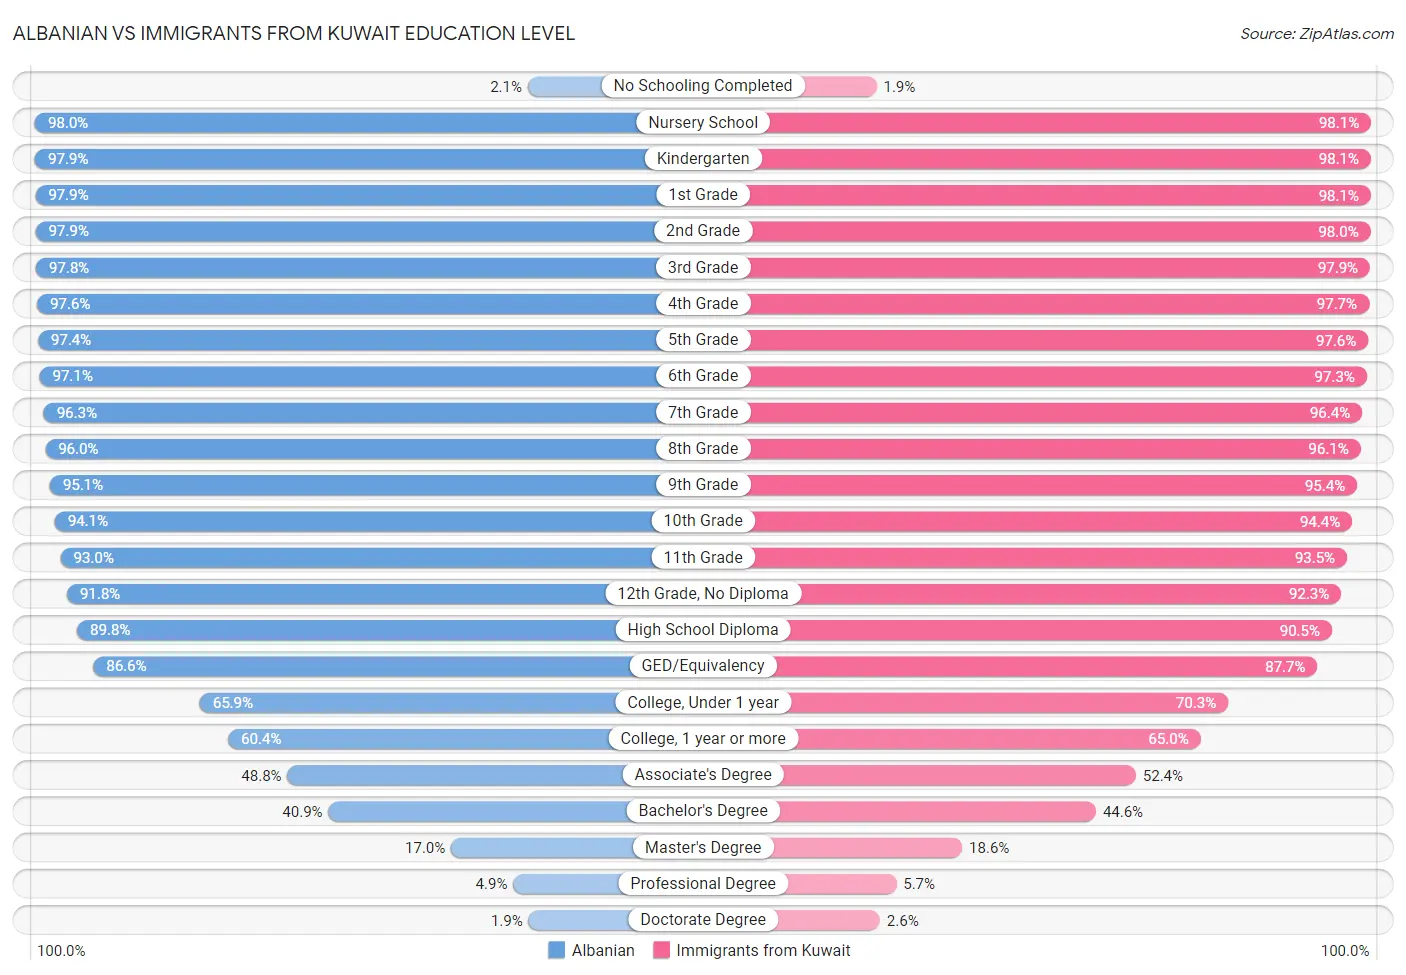 Albanian vs Immigrants from Kuwait Education Level